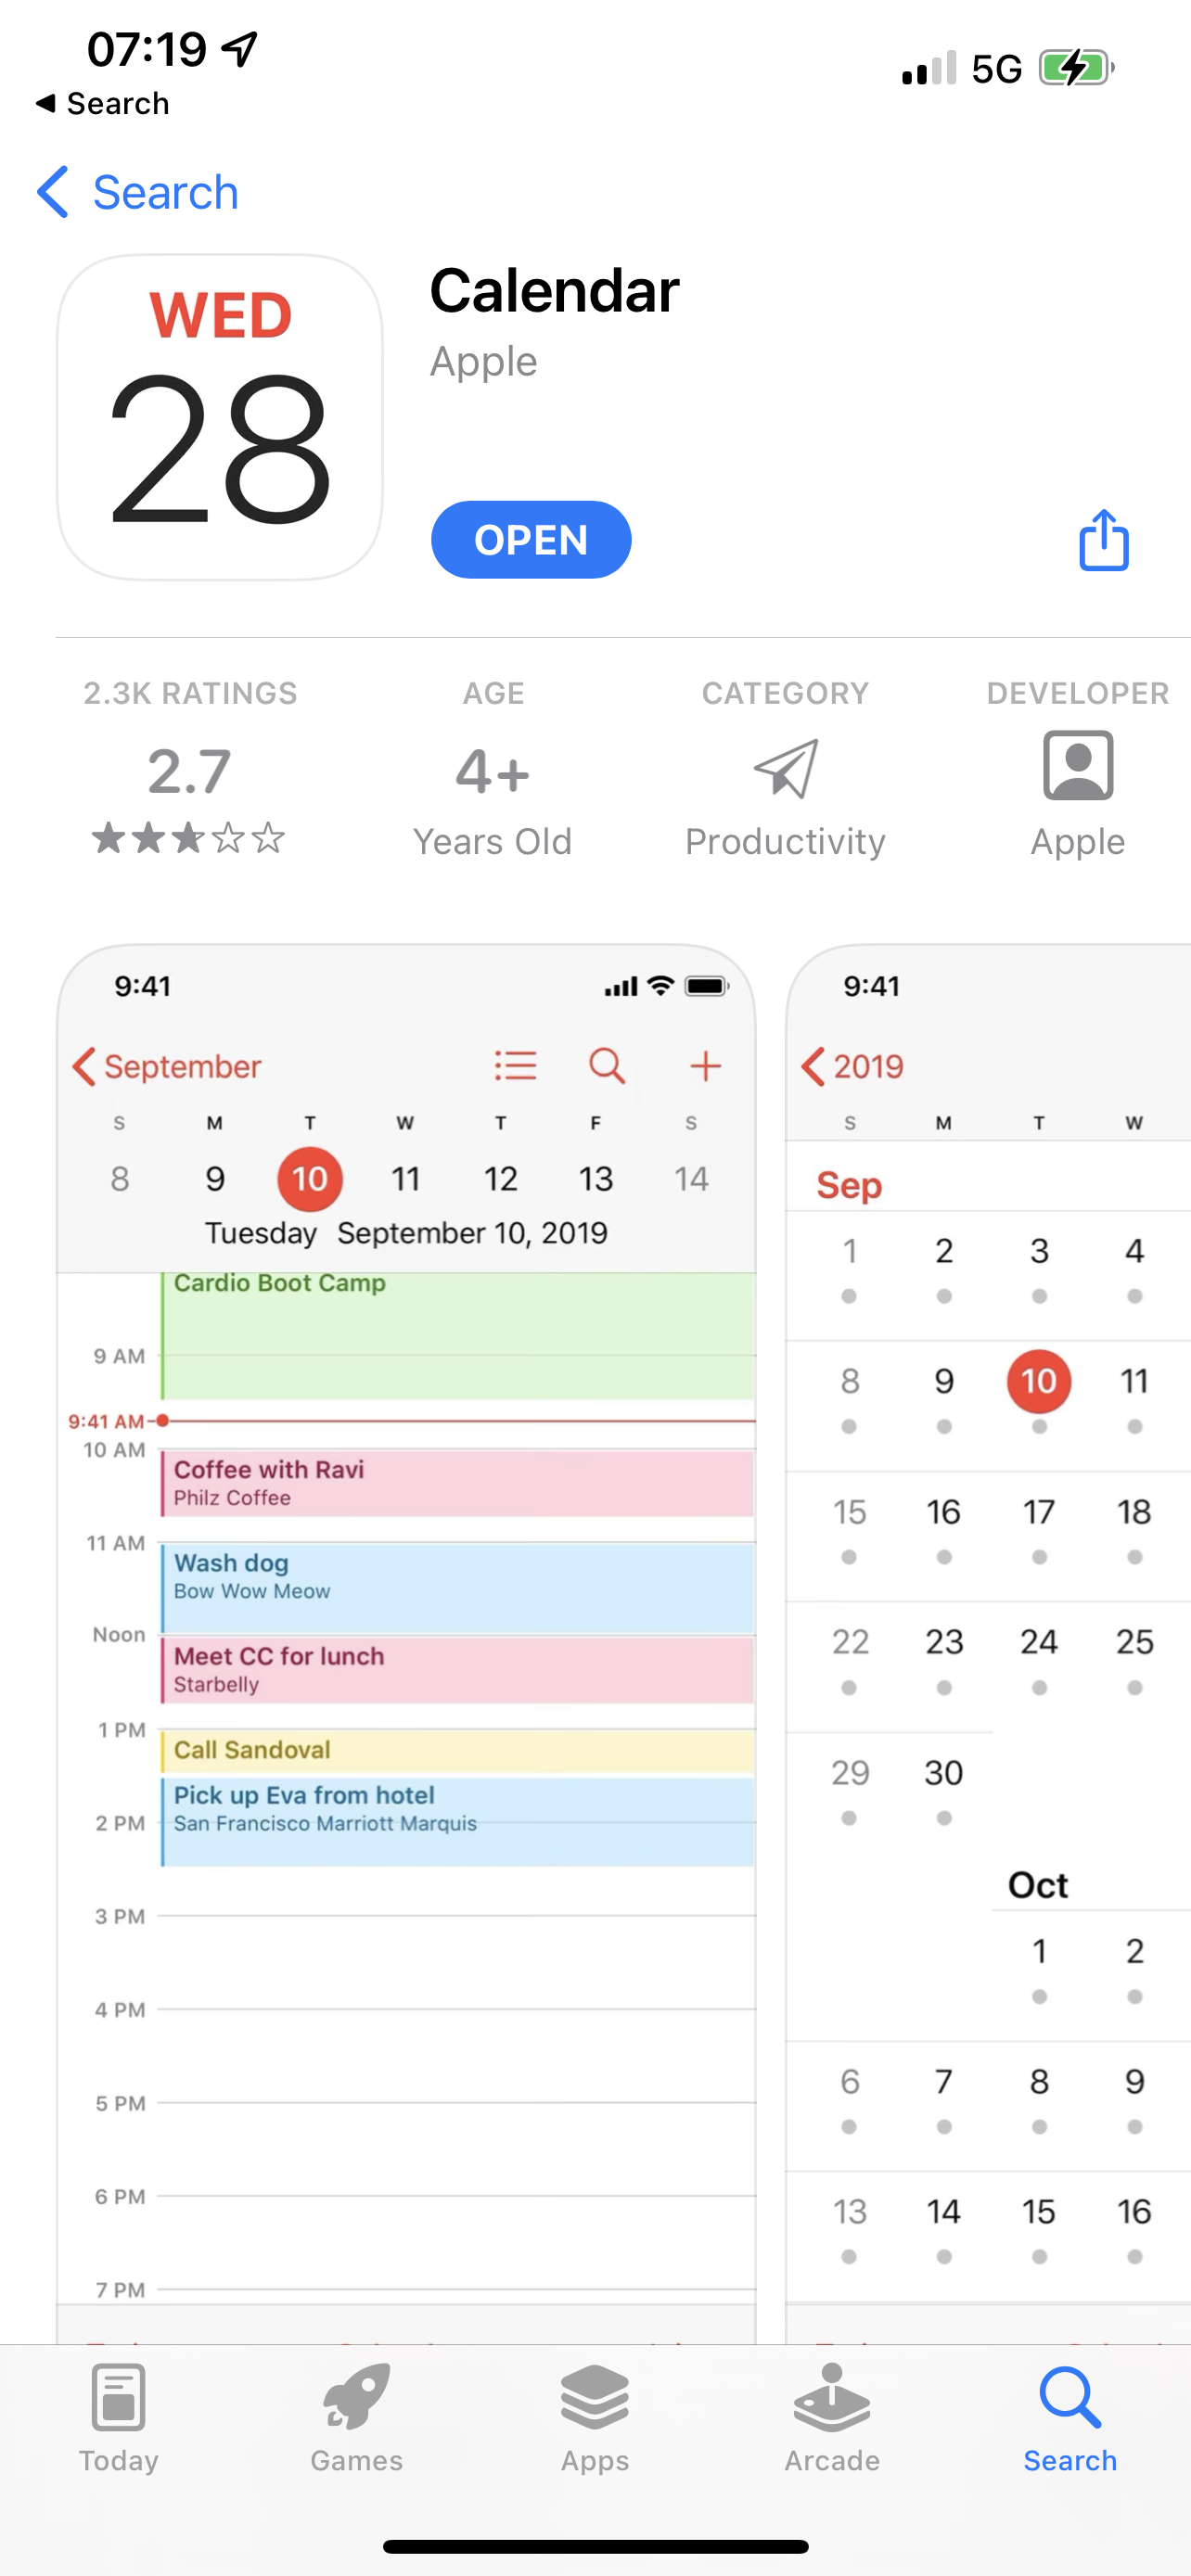 calendar in app store